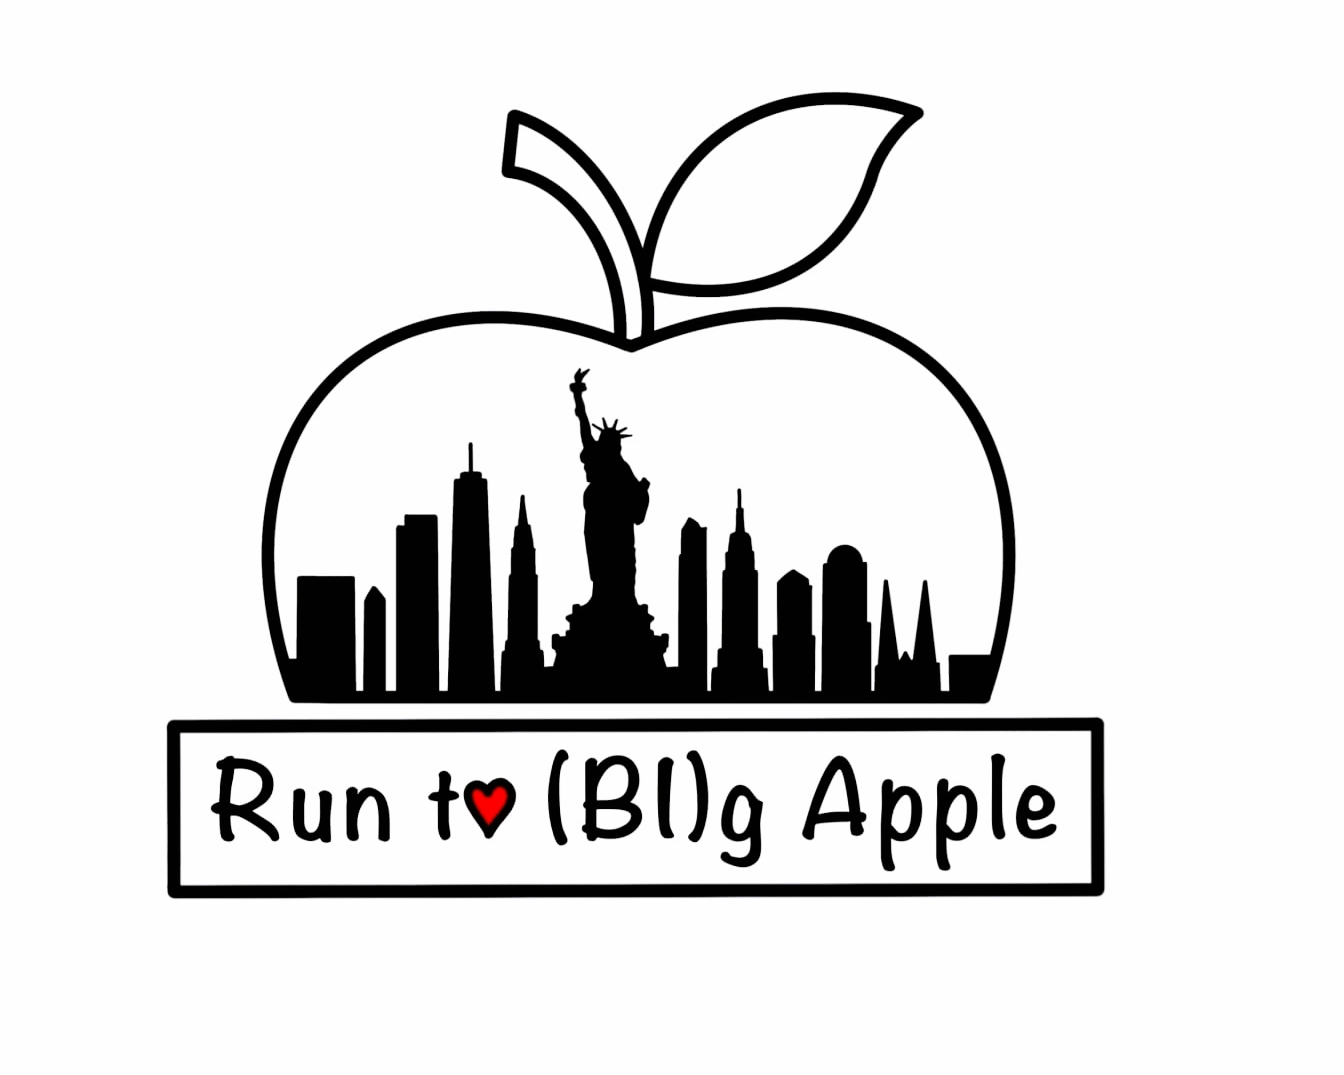 Run to (BI)g Apple